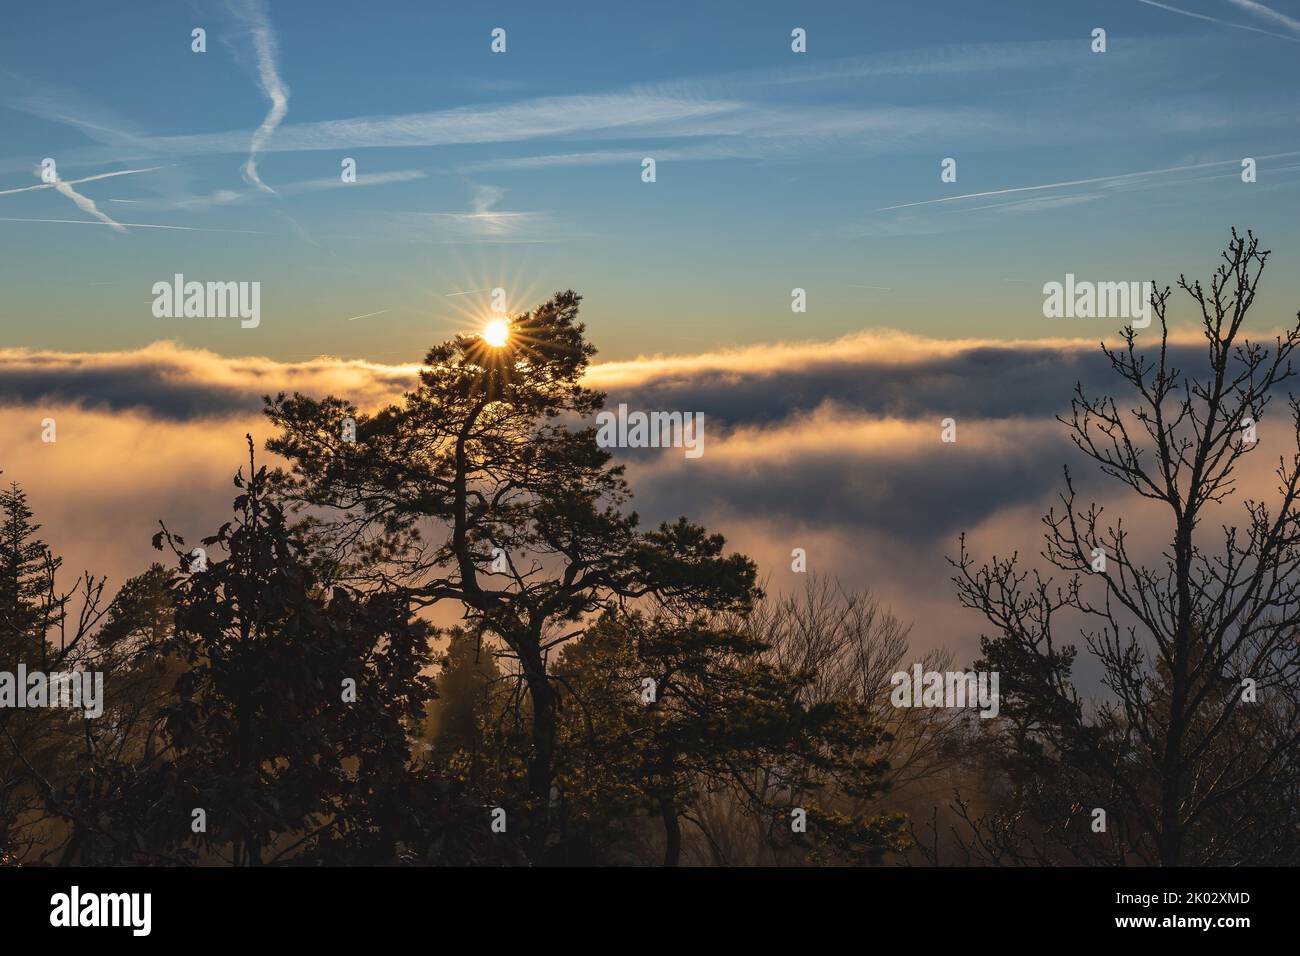 Coucher de soleil dans le brouillard, forêt, Alb souabe, Bade-Wurtemberg, Allemagne Banque D'Images